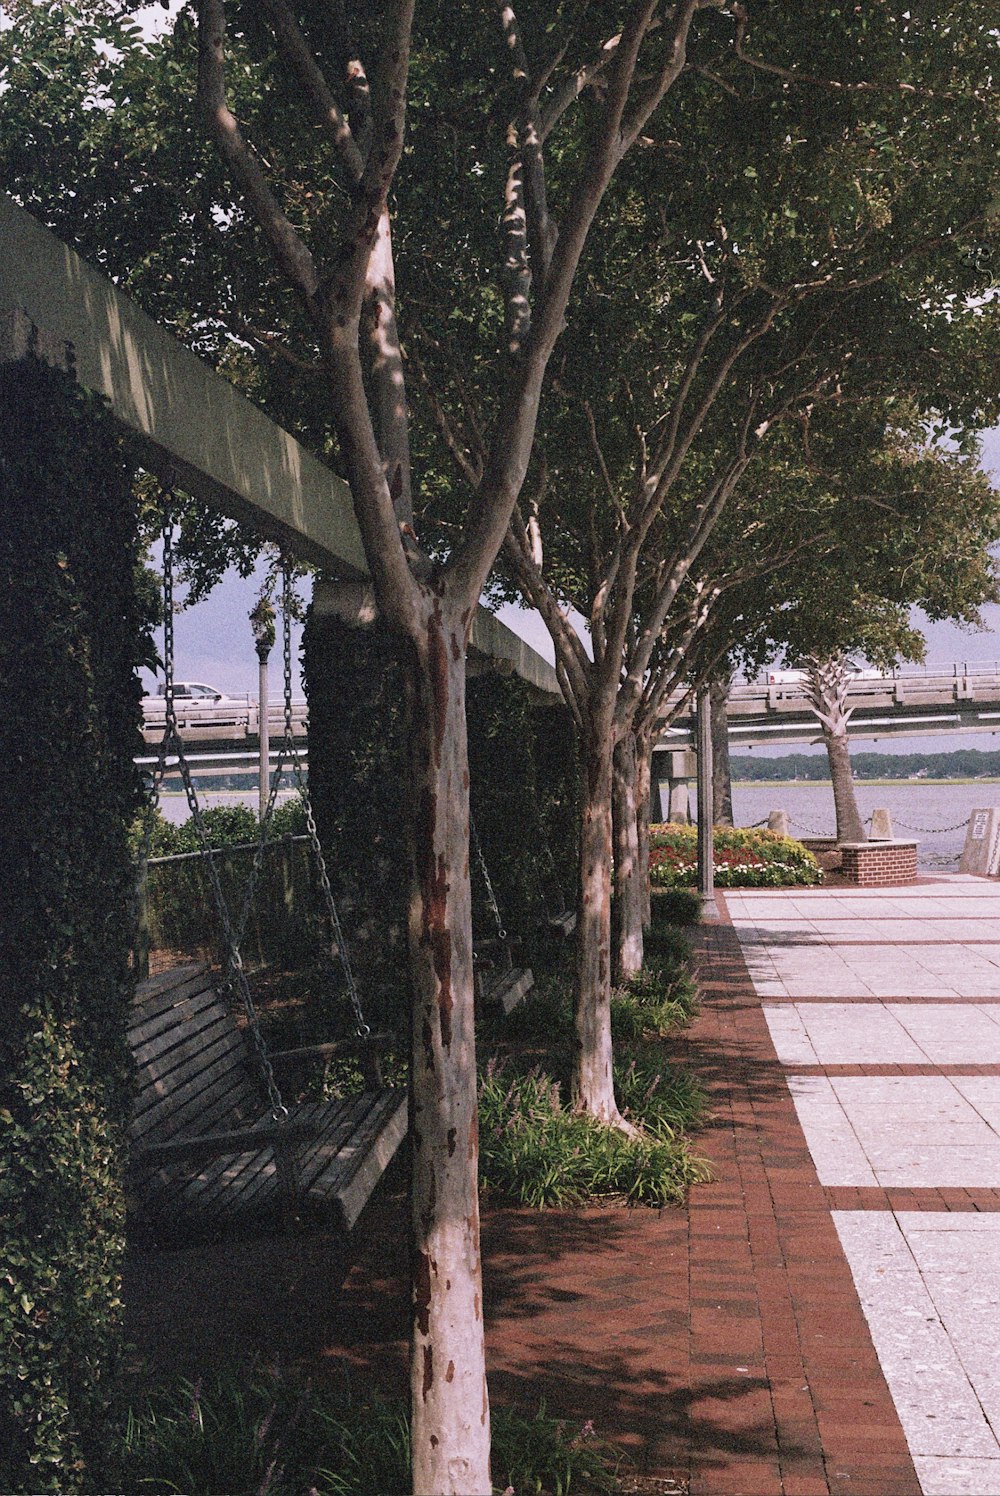 una panchina del parco seduta accanto a una fila di alberi